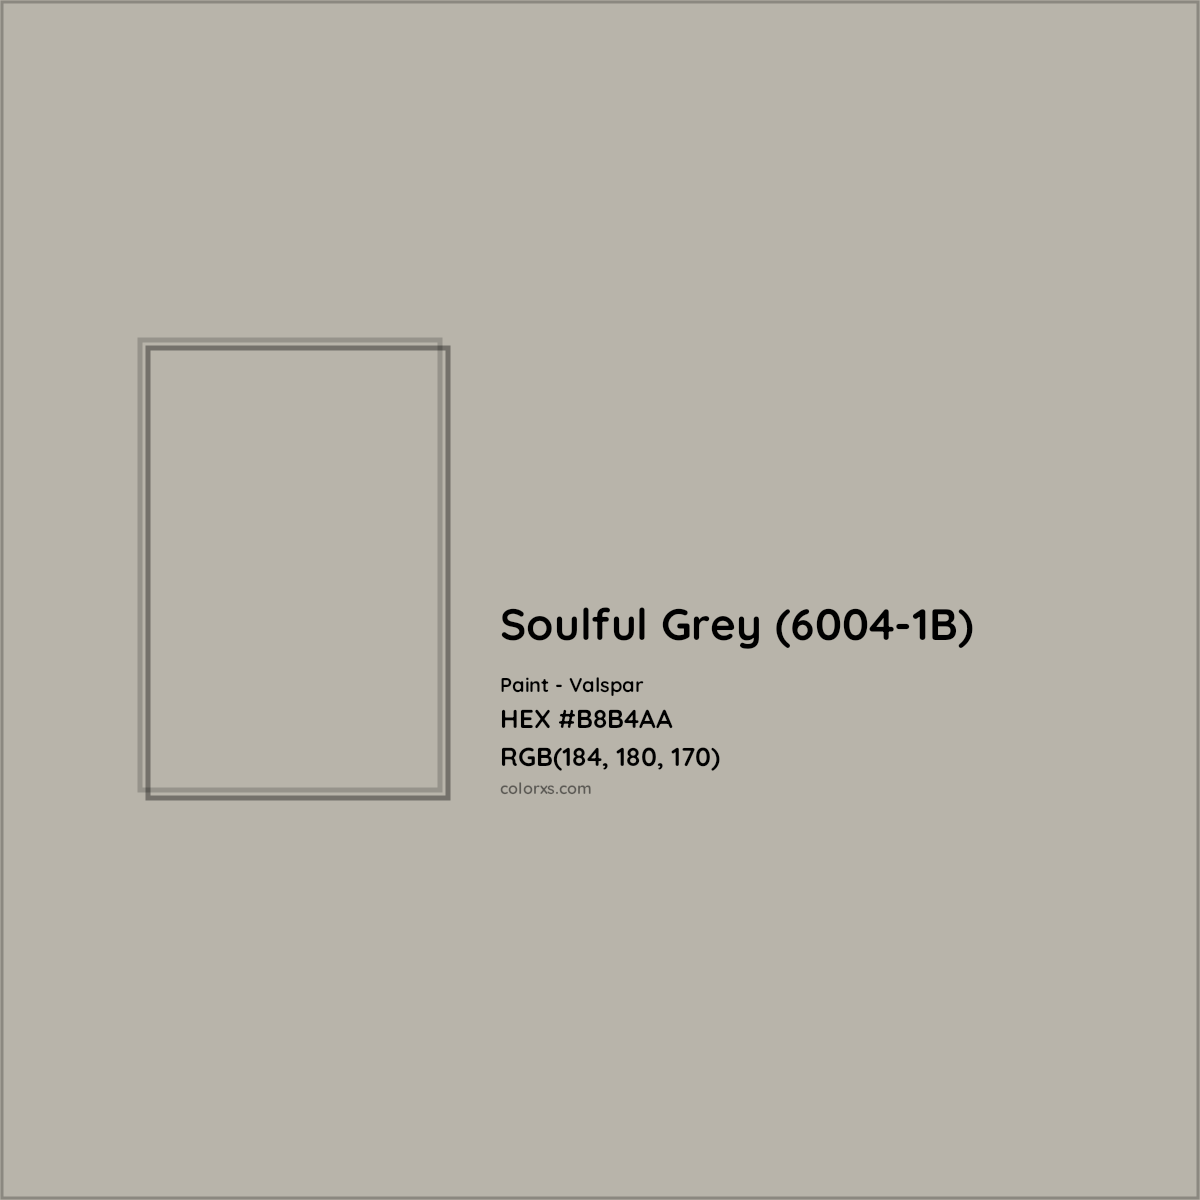 HEX #B8B4AA Soulful Grey (6004-1B) Paint Valspar - Color Code